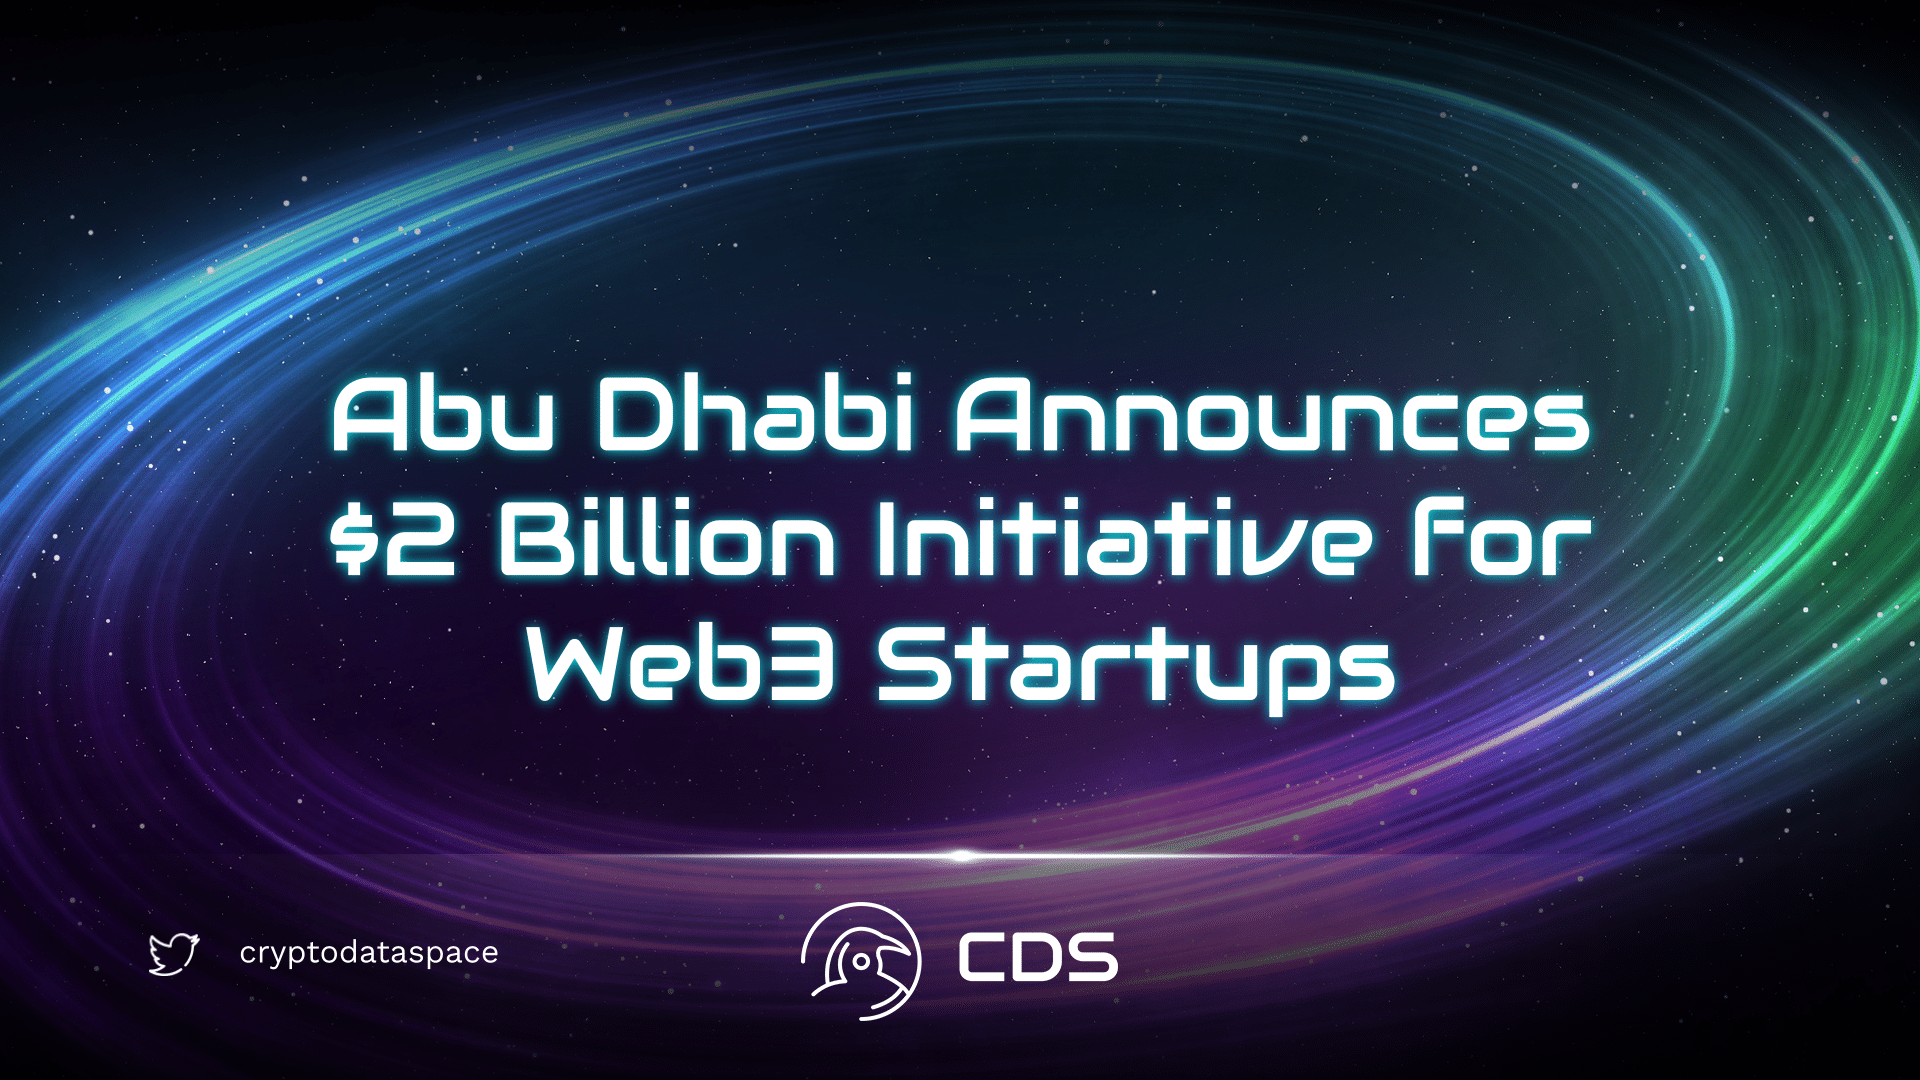 Abu Dhabi Announces $2 Billion Initiative for Web3 Startups